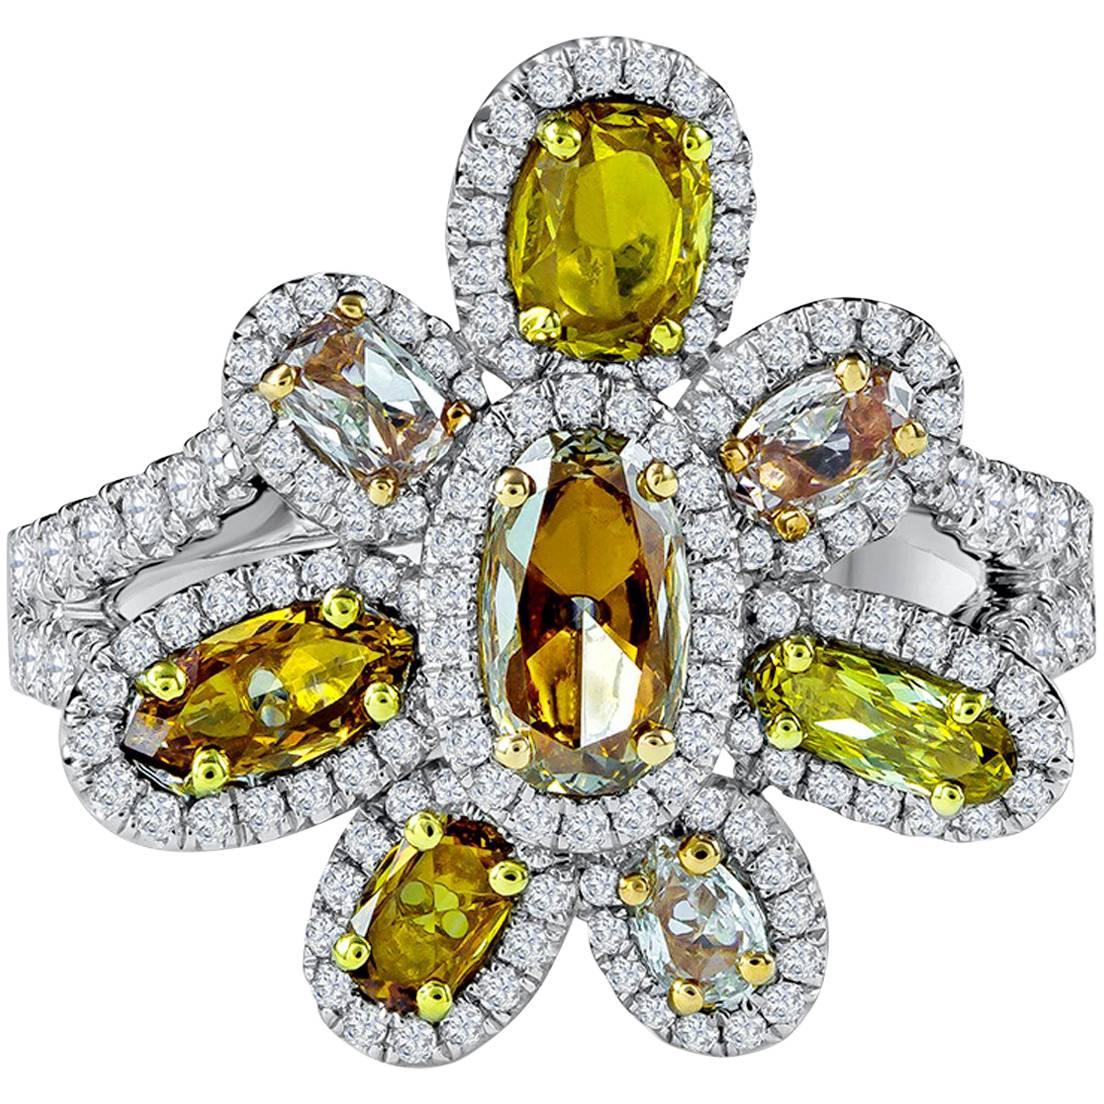 1.36 Carat Total Mixed Cut Fancy Color Gemstone with Diamond Flower Ring (bague fleur)